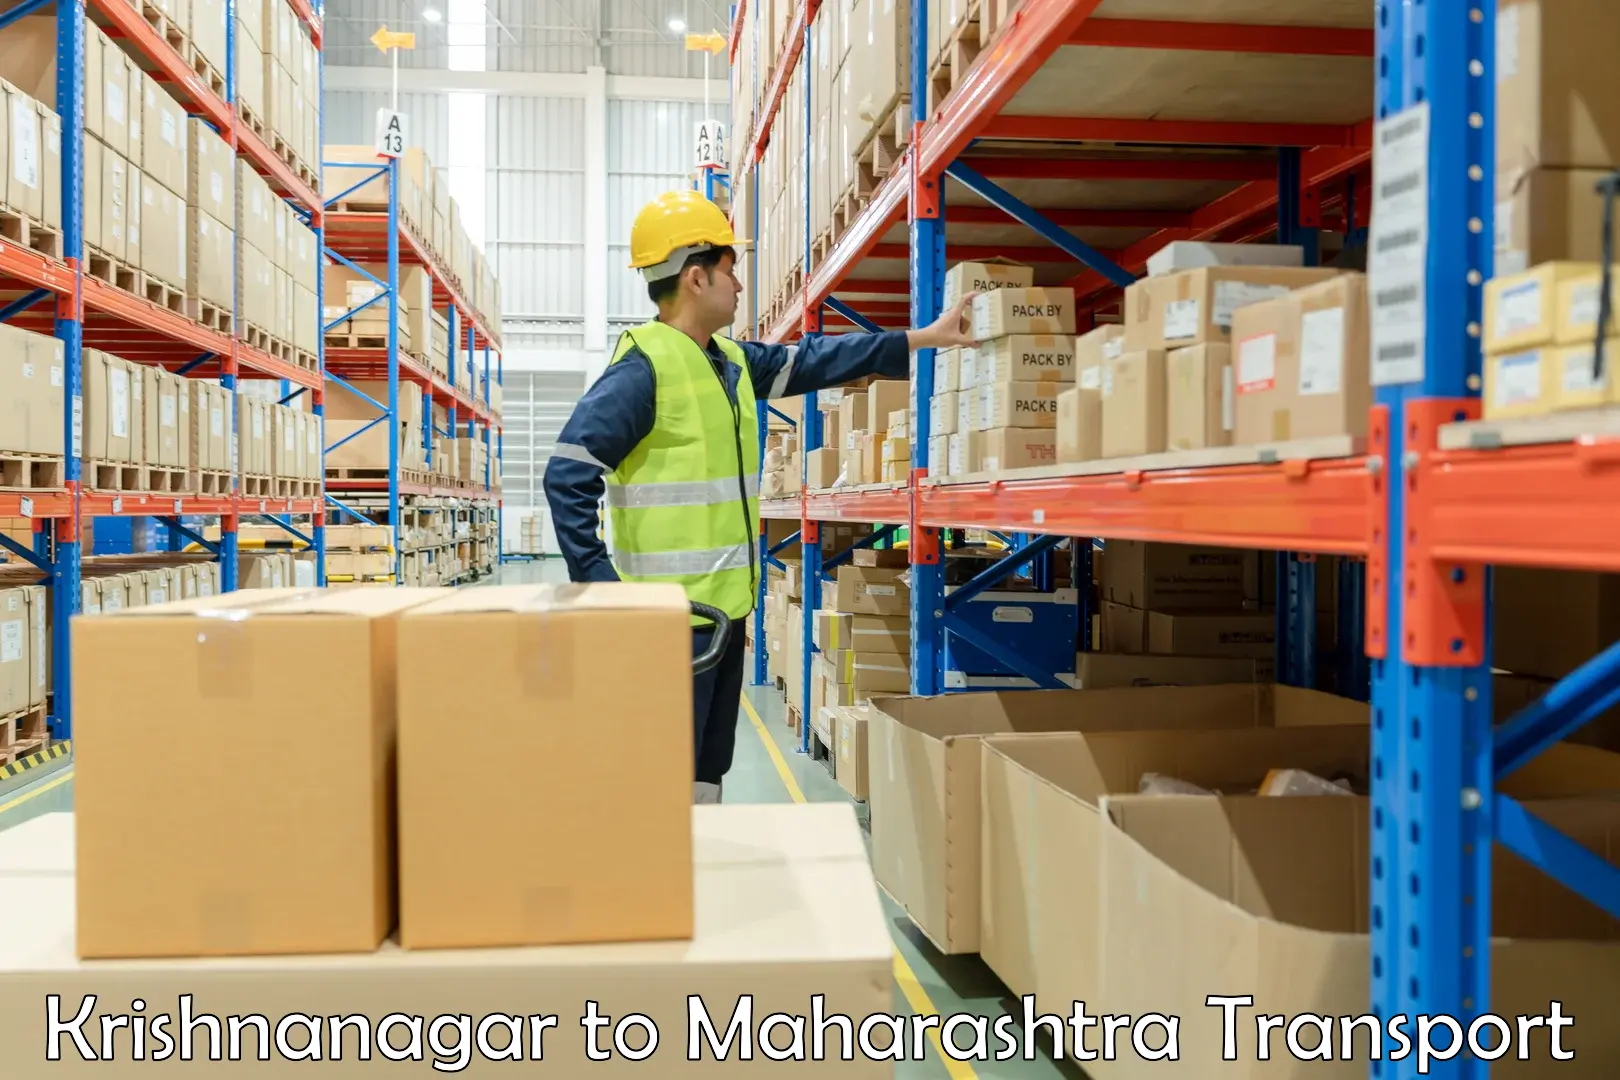 Furniture transport service Krishnanagar to Dusarbid